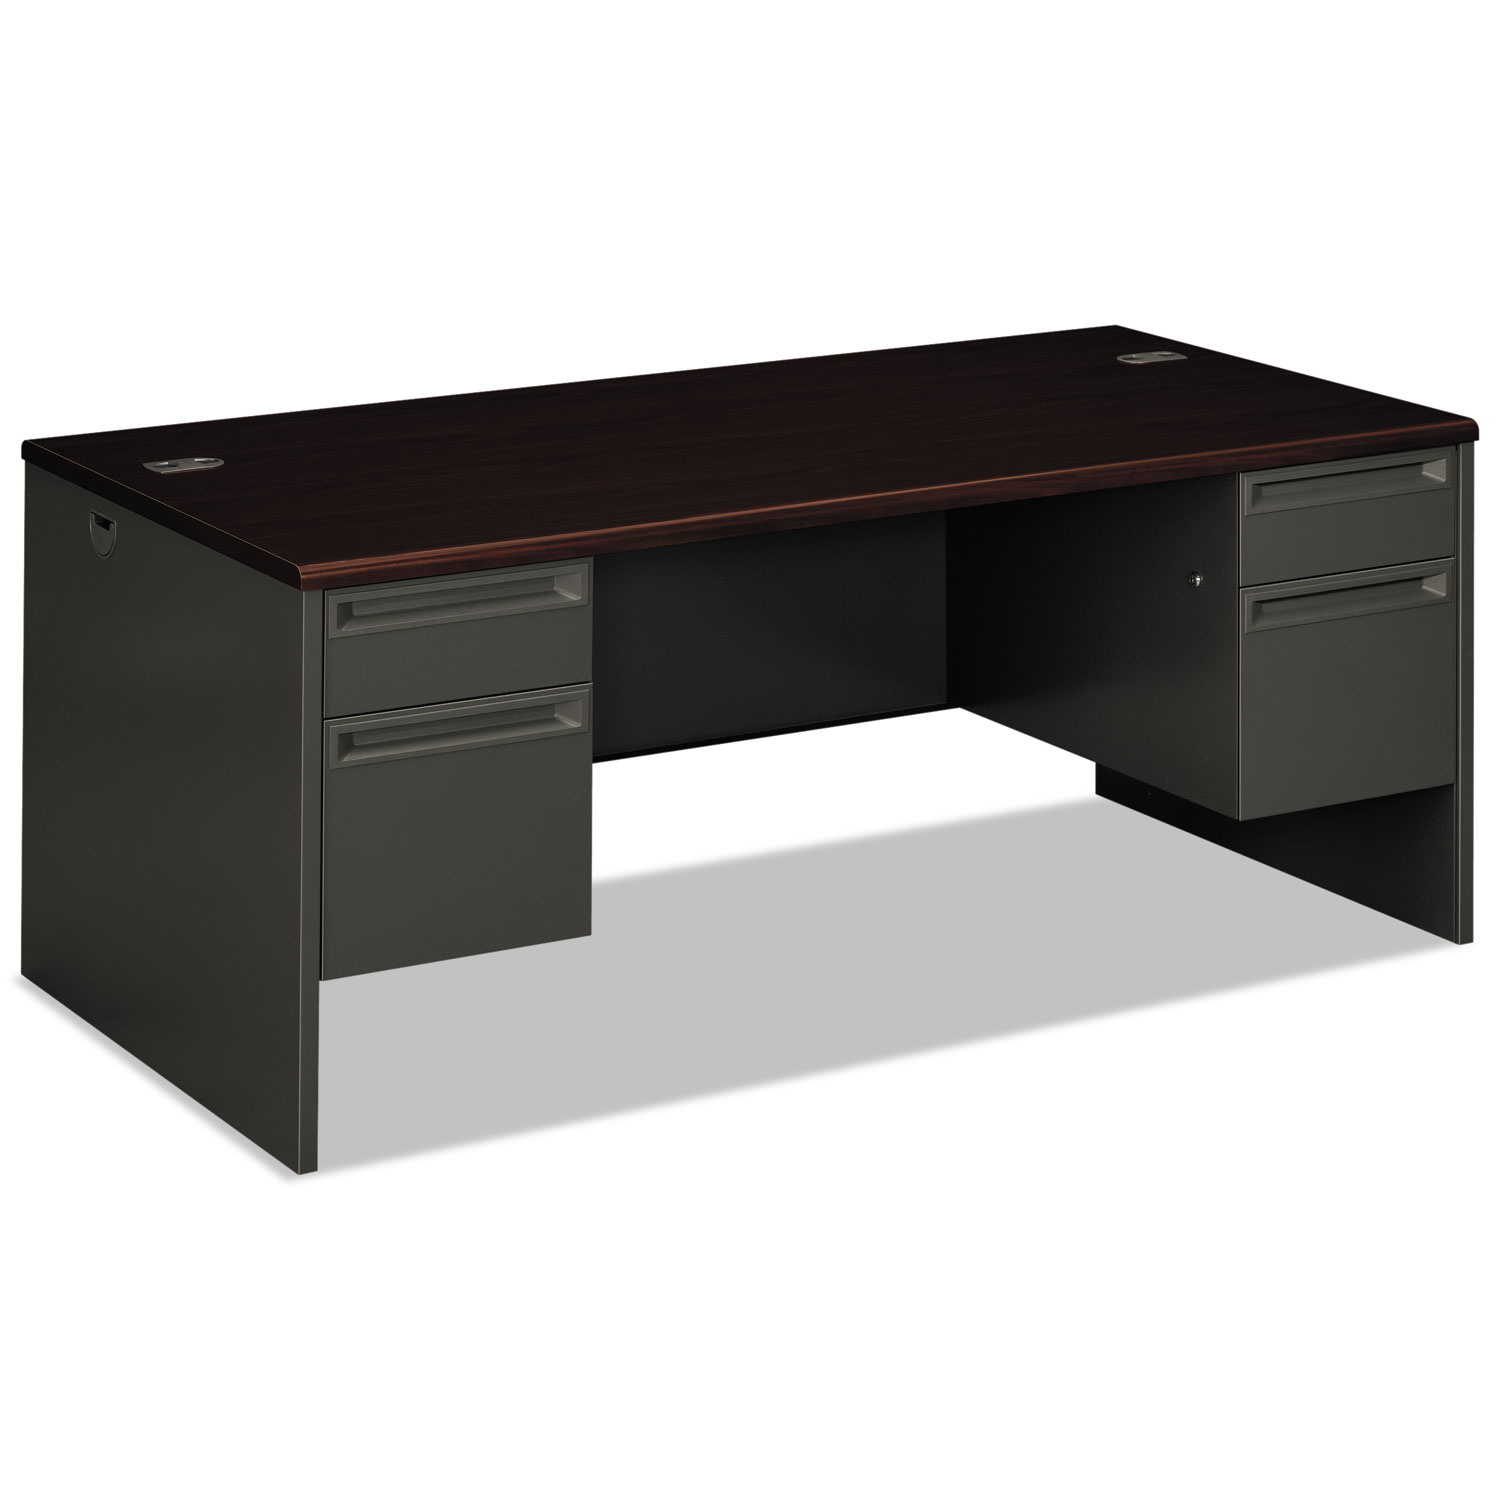 38000 Series Double Pedestal Desk, 72w x 36d x 29-1/2h, Mahogany/Charcoal